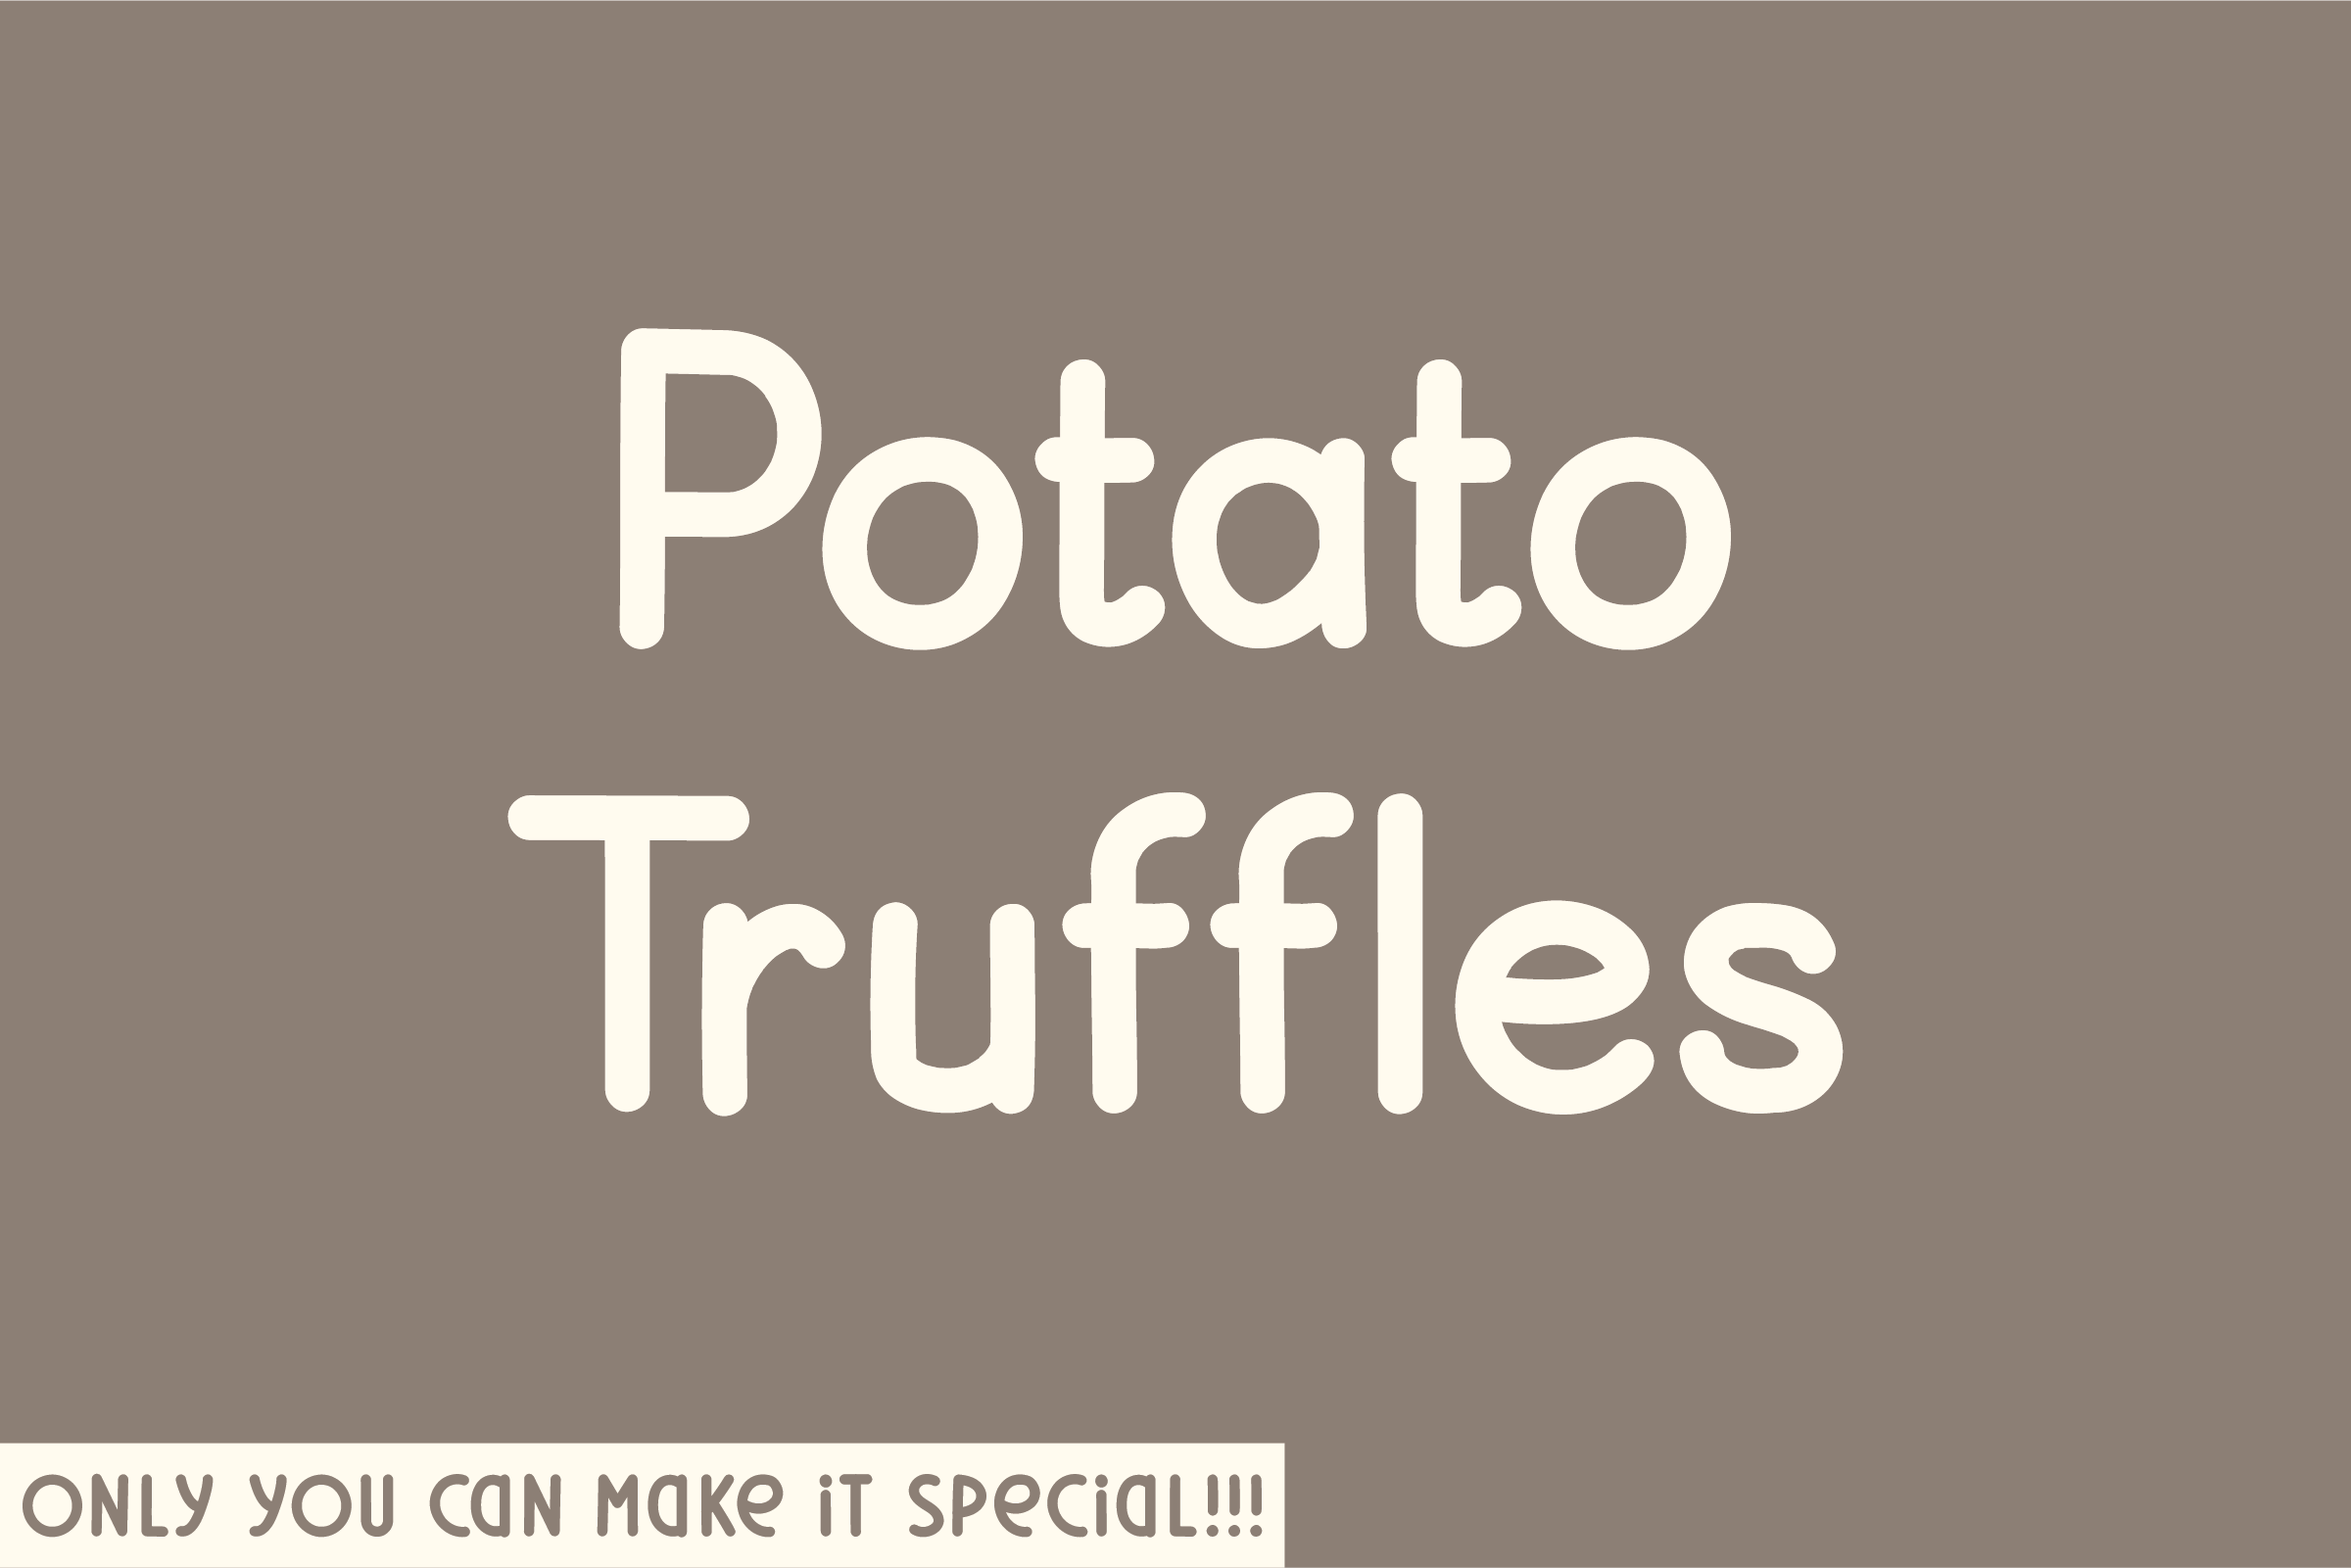 Potato Truffles